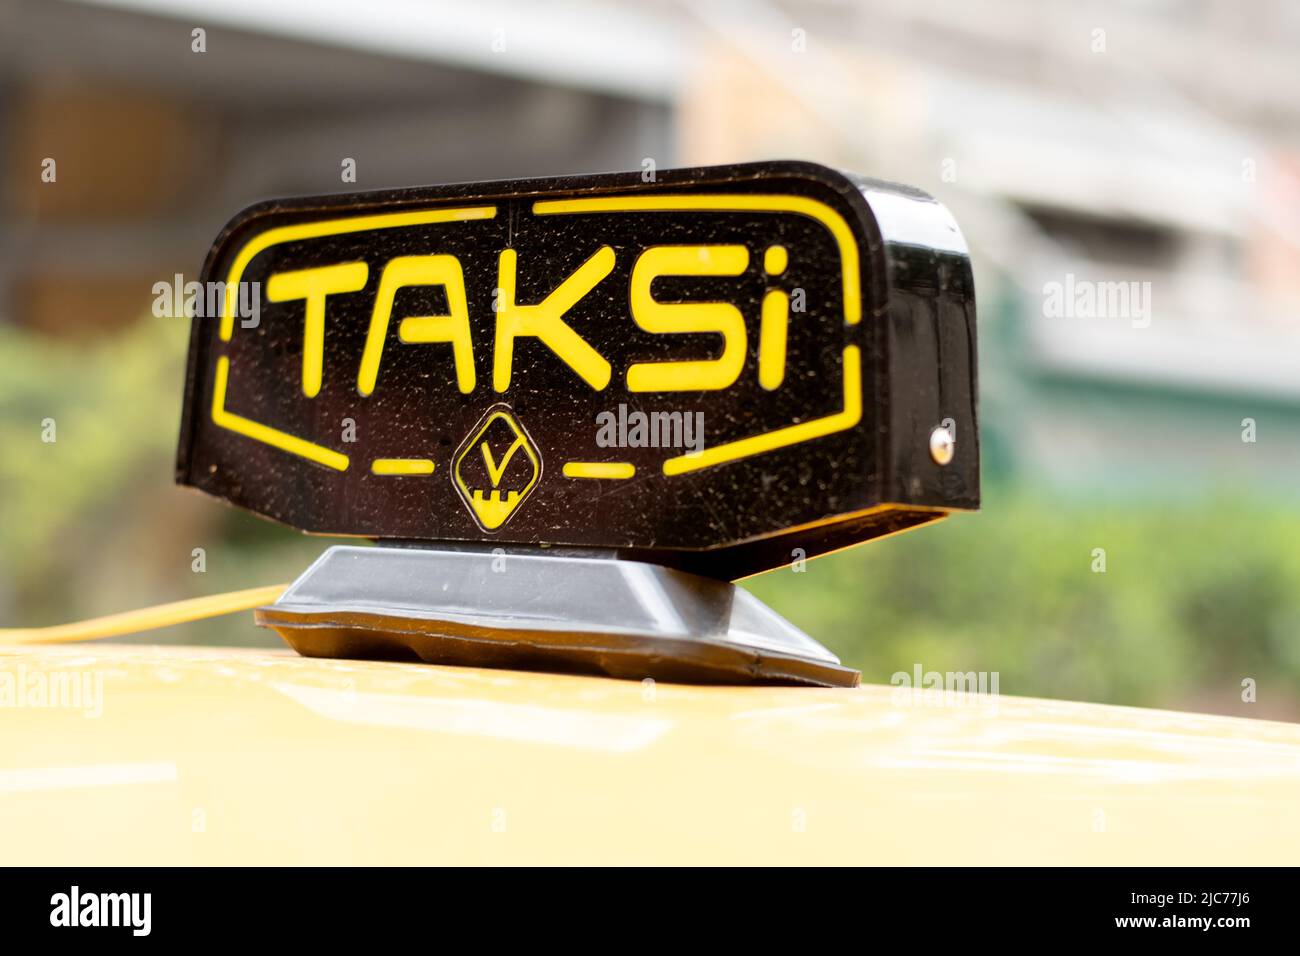 Taksi taxi sign, Istanbul, Turkey Stock Photo